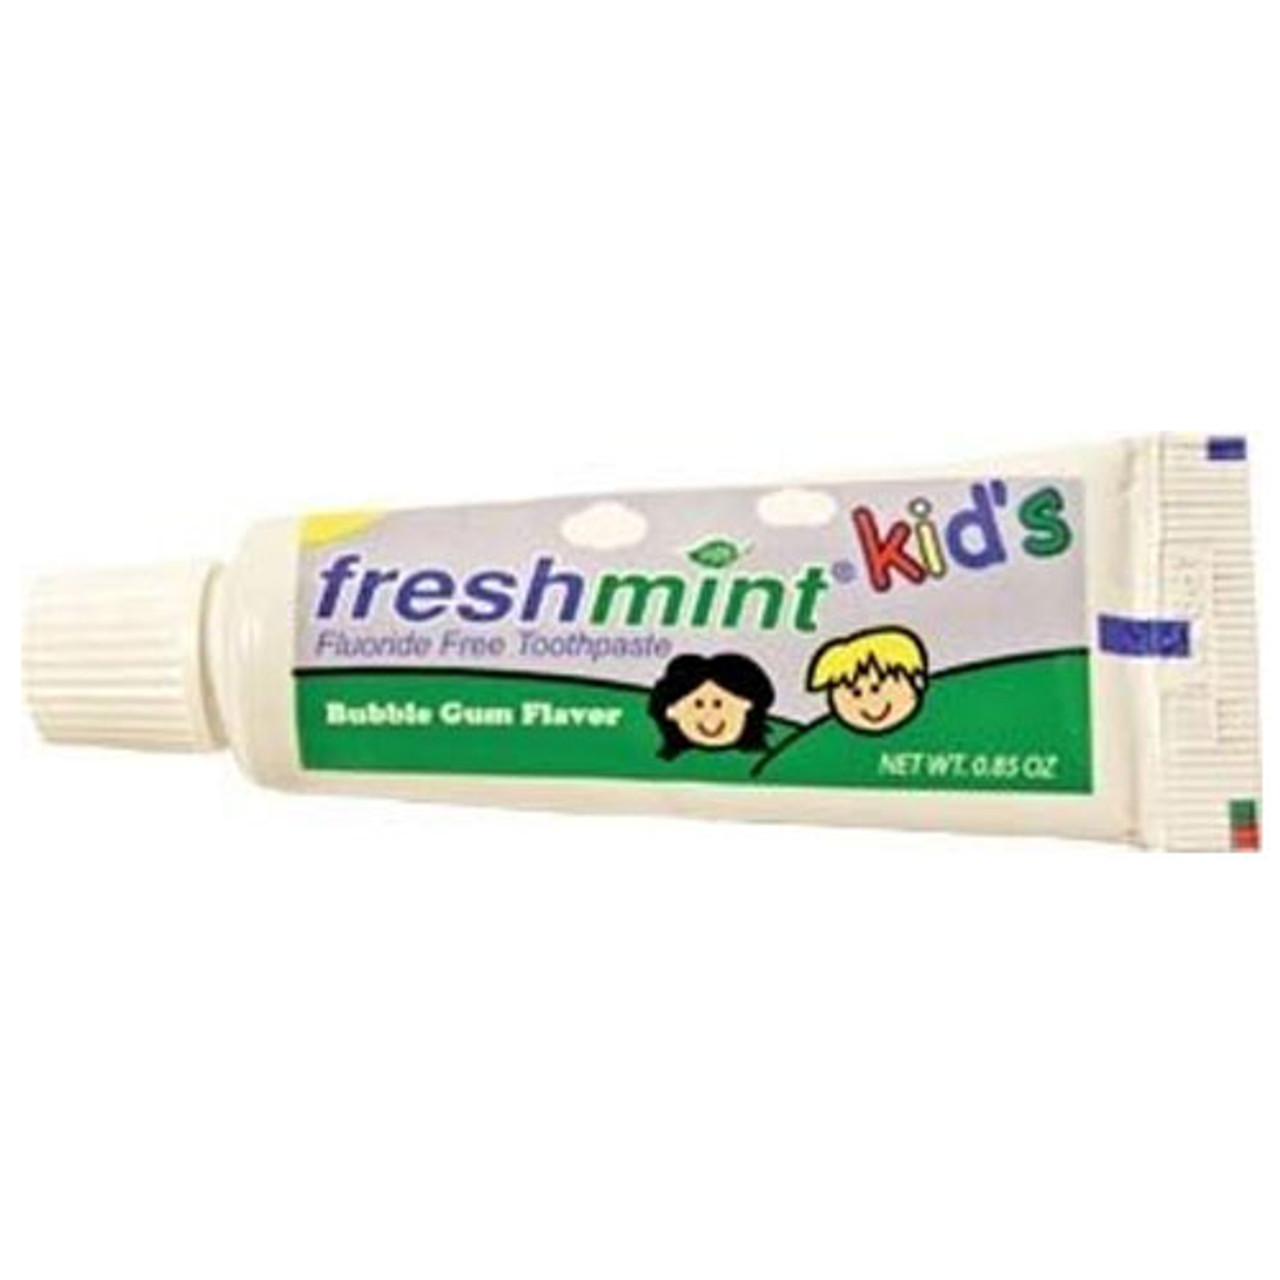 NWI Kids Toothpaste Fluoride Free Toothpaste, Bubblegum Flavor, 0.85 oz, 36/bx, 4 bx/cs